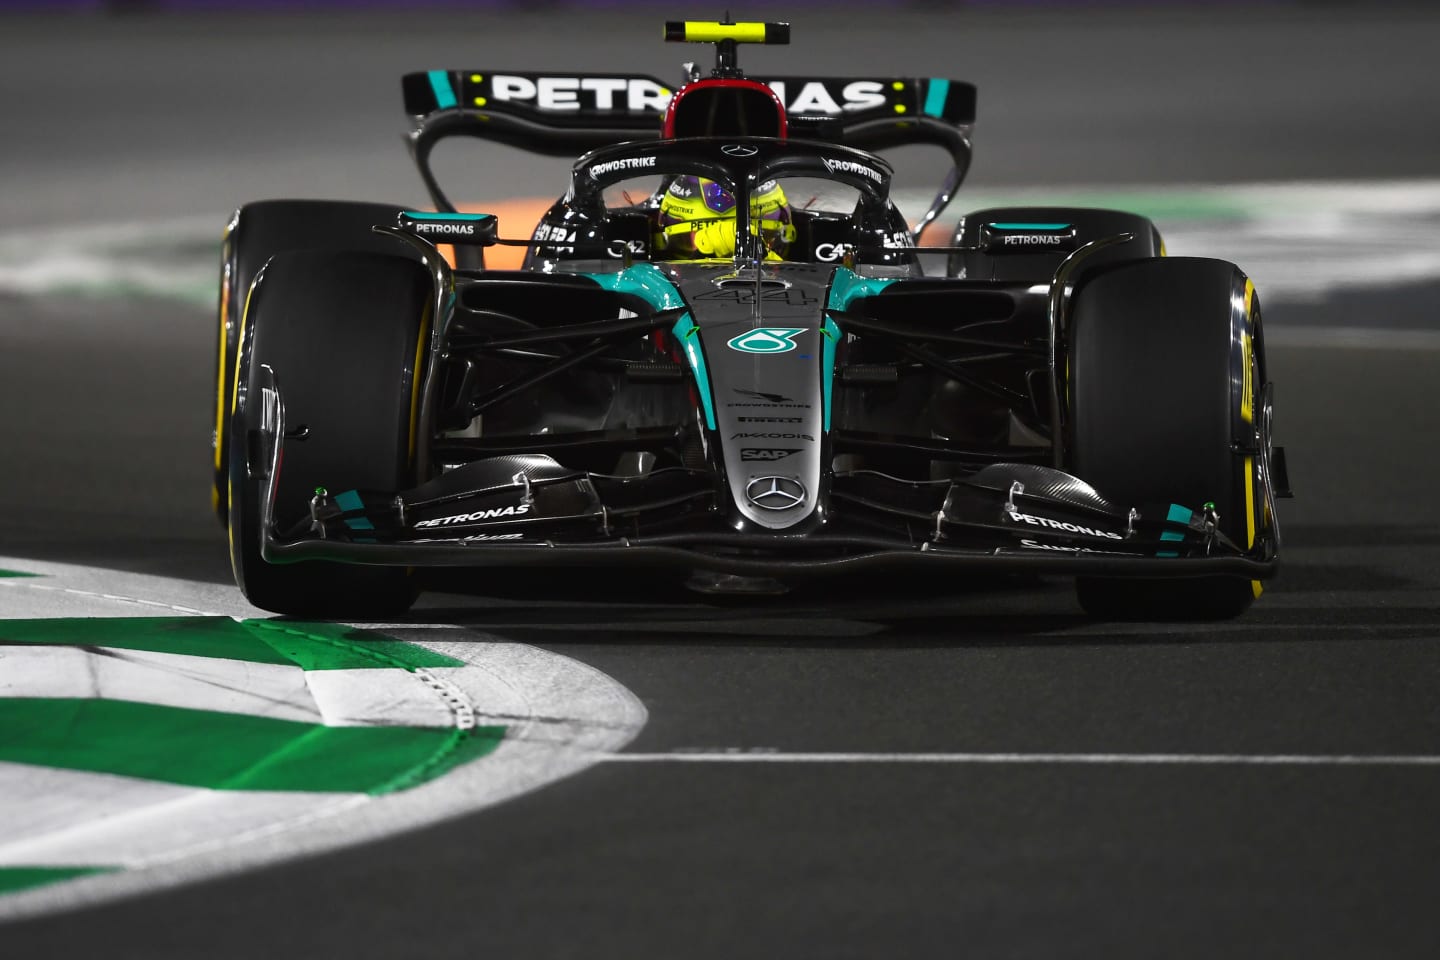 JEDDAH, SAUDI ARABIA - MARCH 09: Lewis Hamilton of Great Britain driving the (44) Mercedes AMG